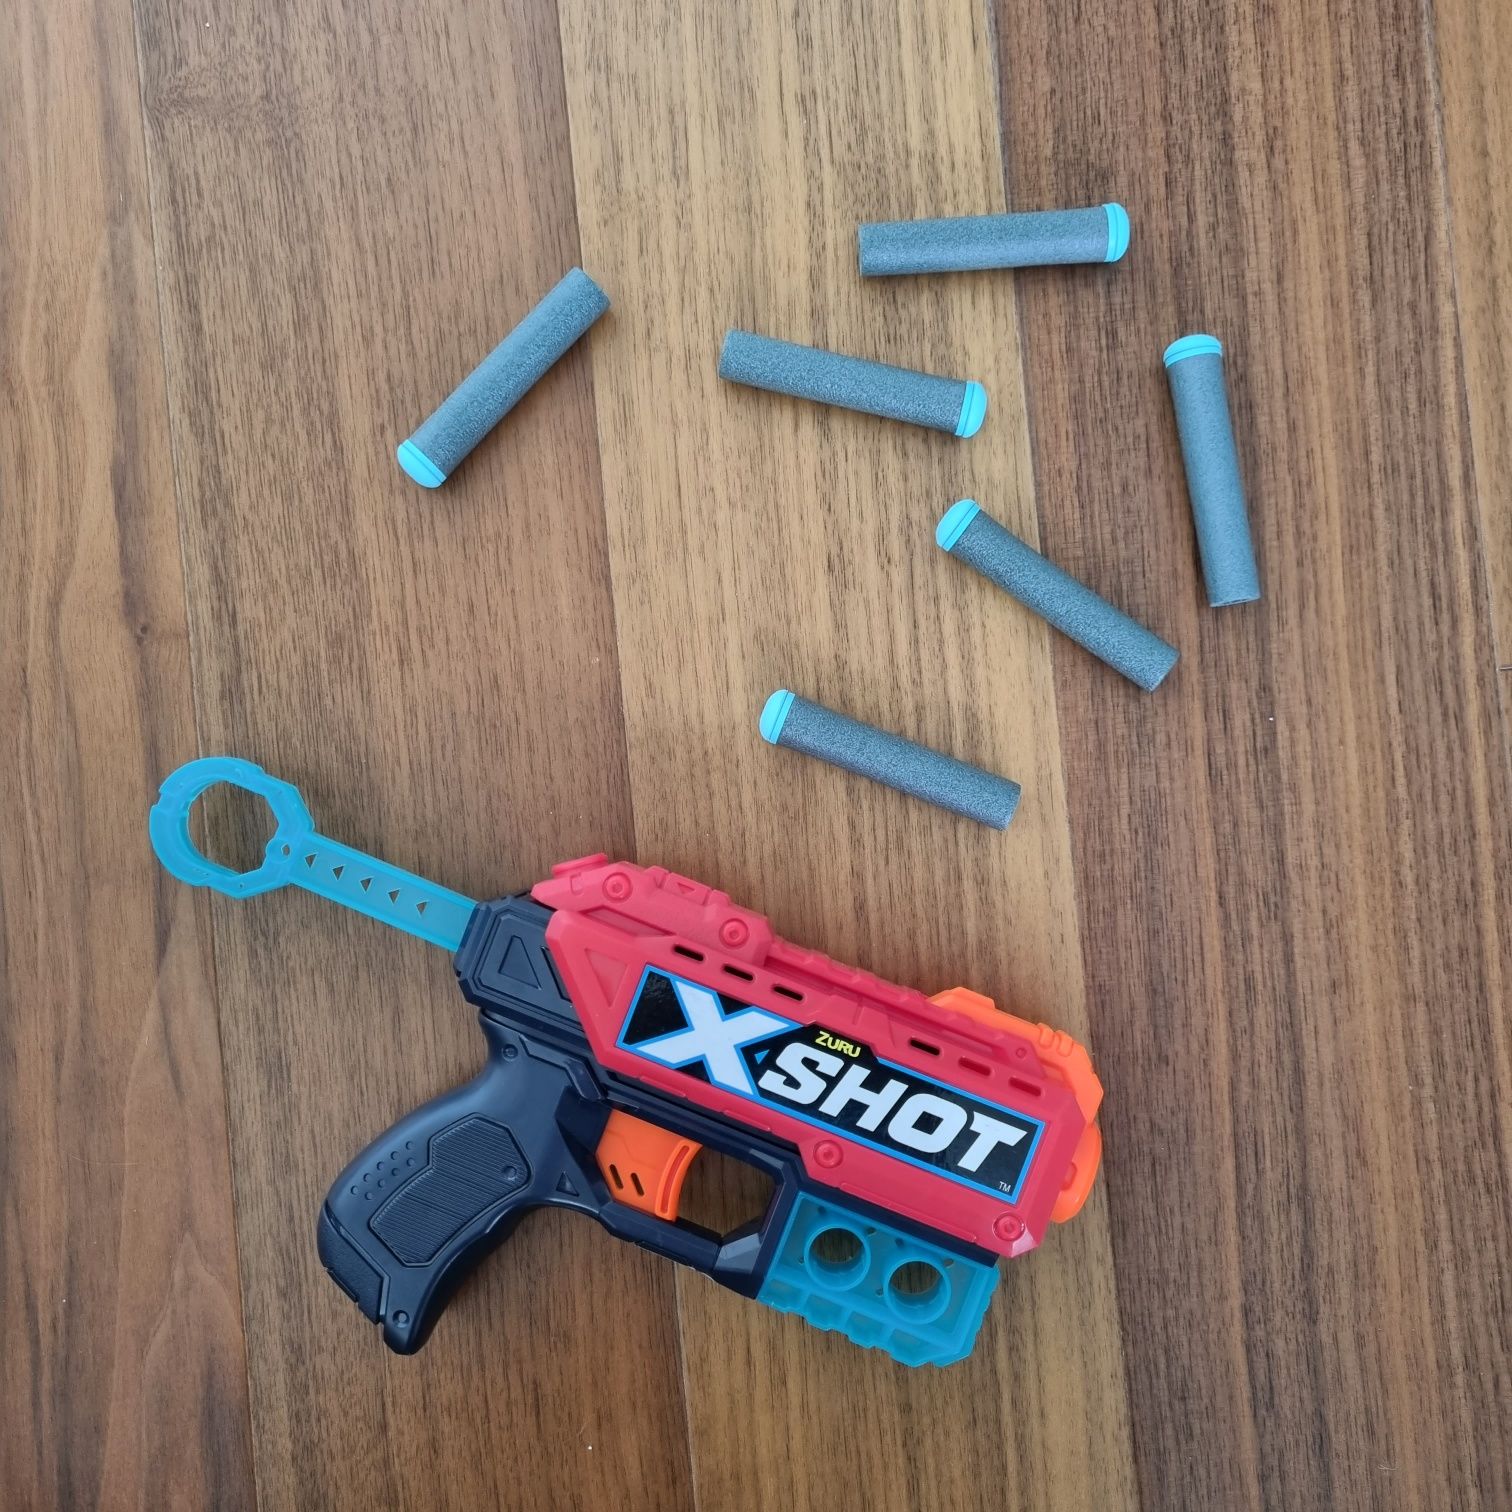 X-shot zuru pistola brinquedo